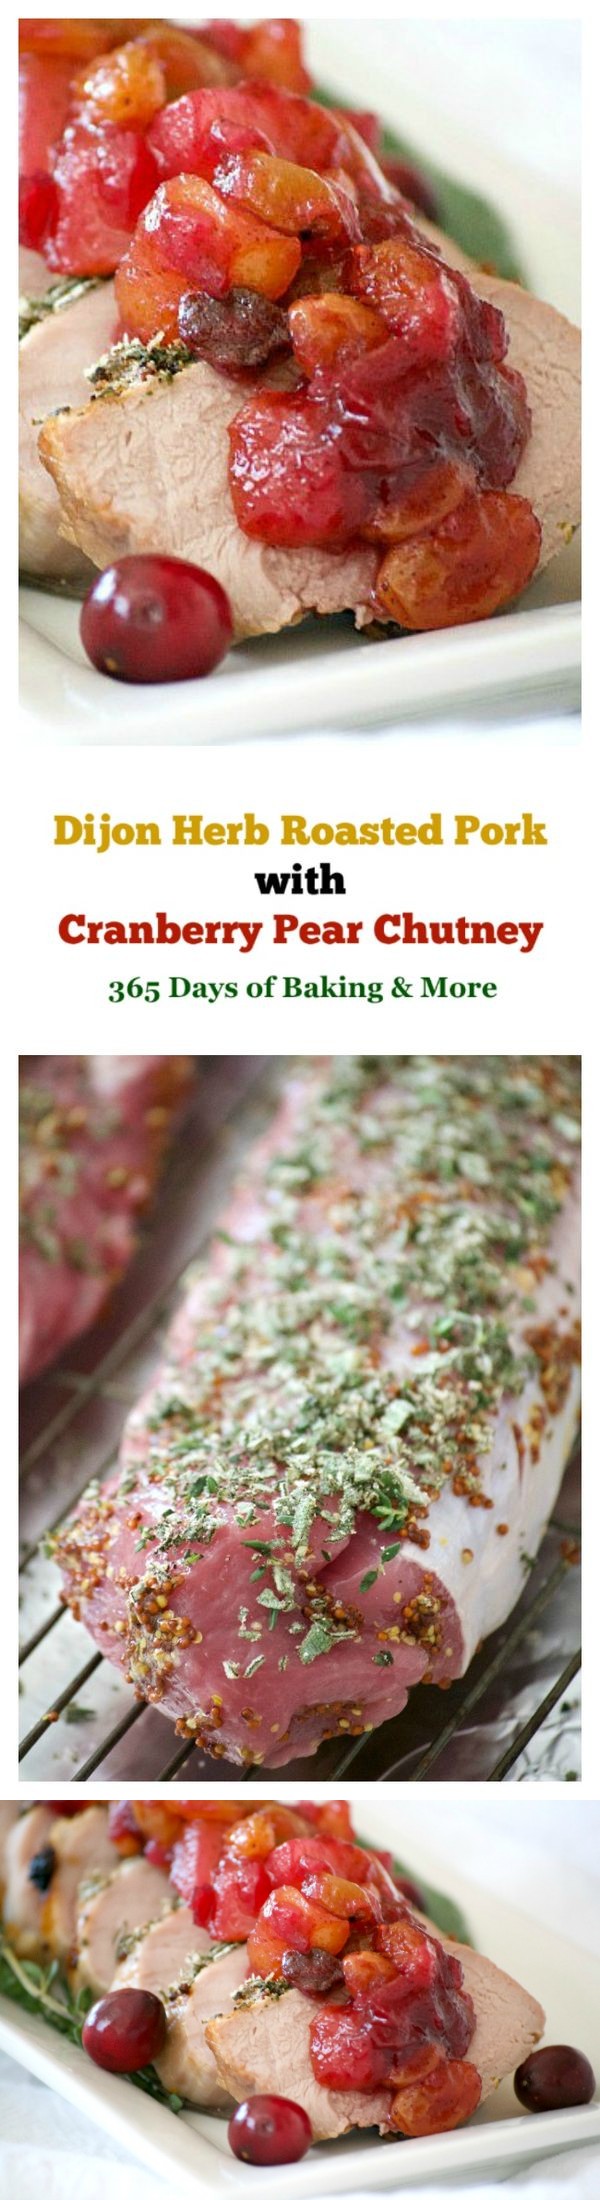 Dijon Herb Roasted Pork with Cranberry Pear Chutney